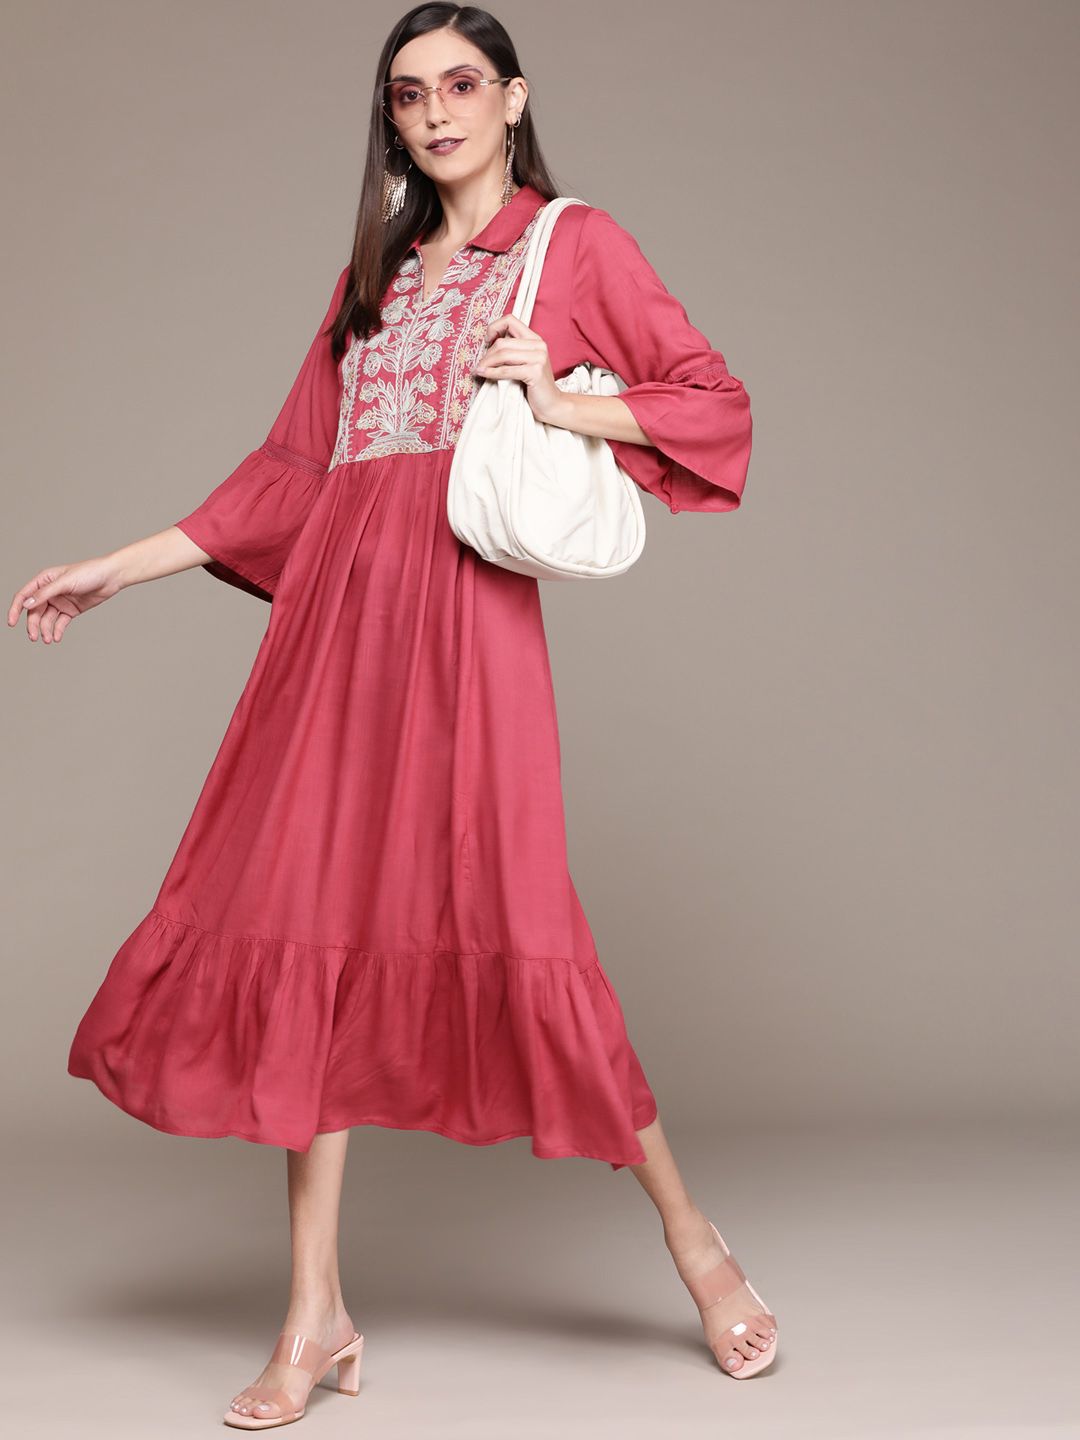 aarke Ritu Kumar Women Pink & White Ethnic Motifs Embroidered Shirt Midi Dress Price in India